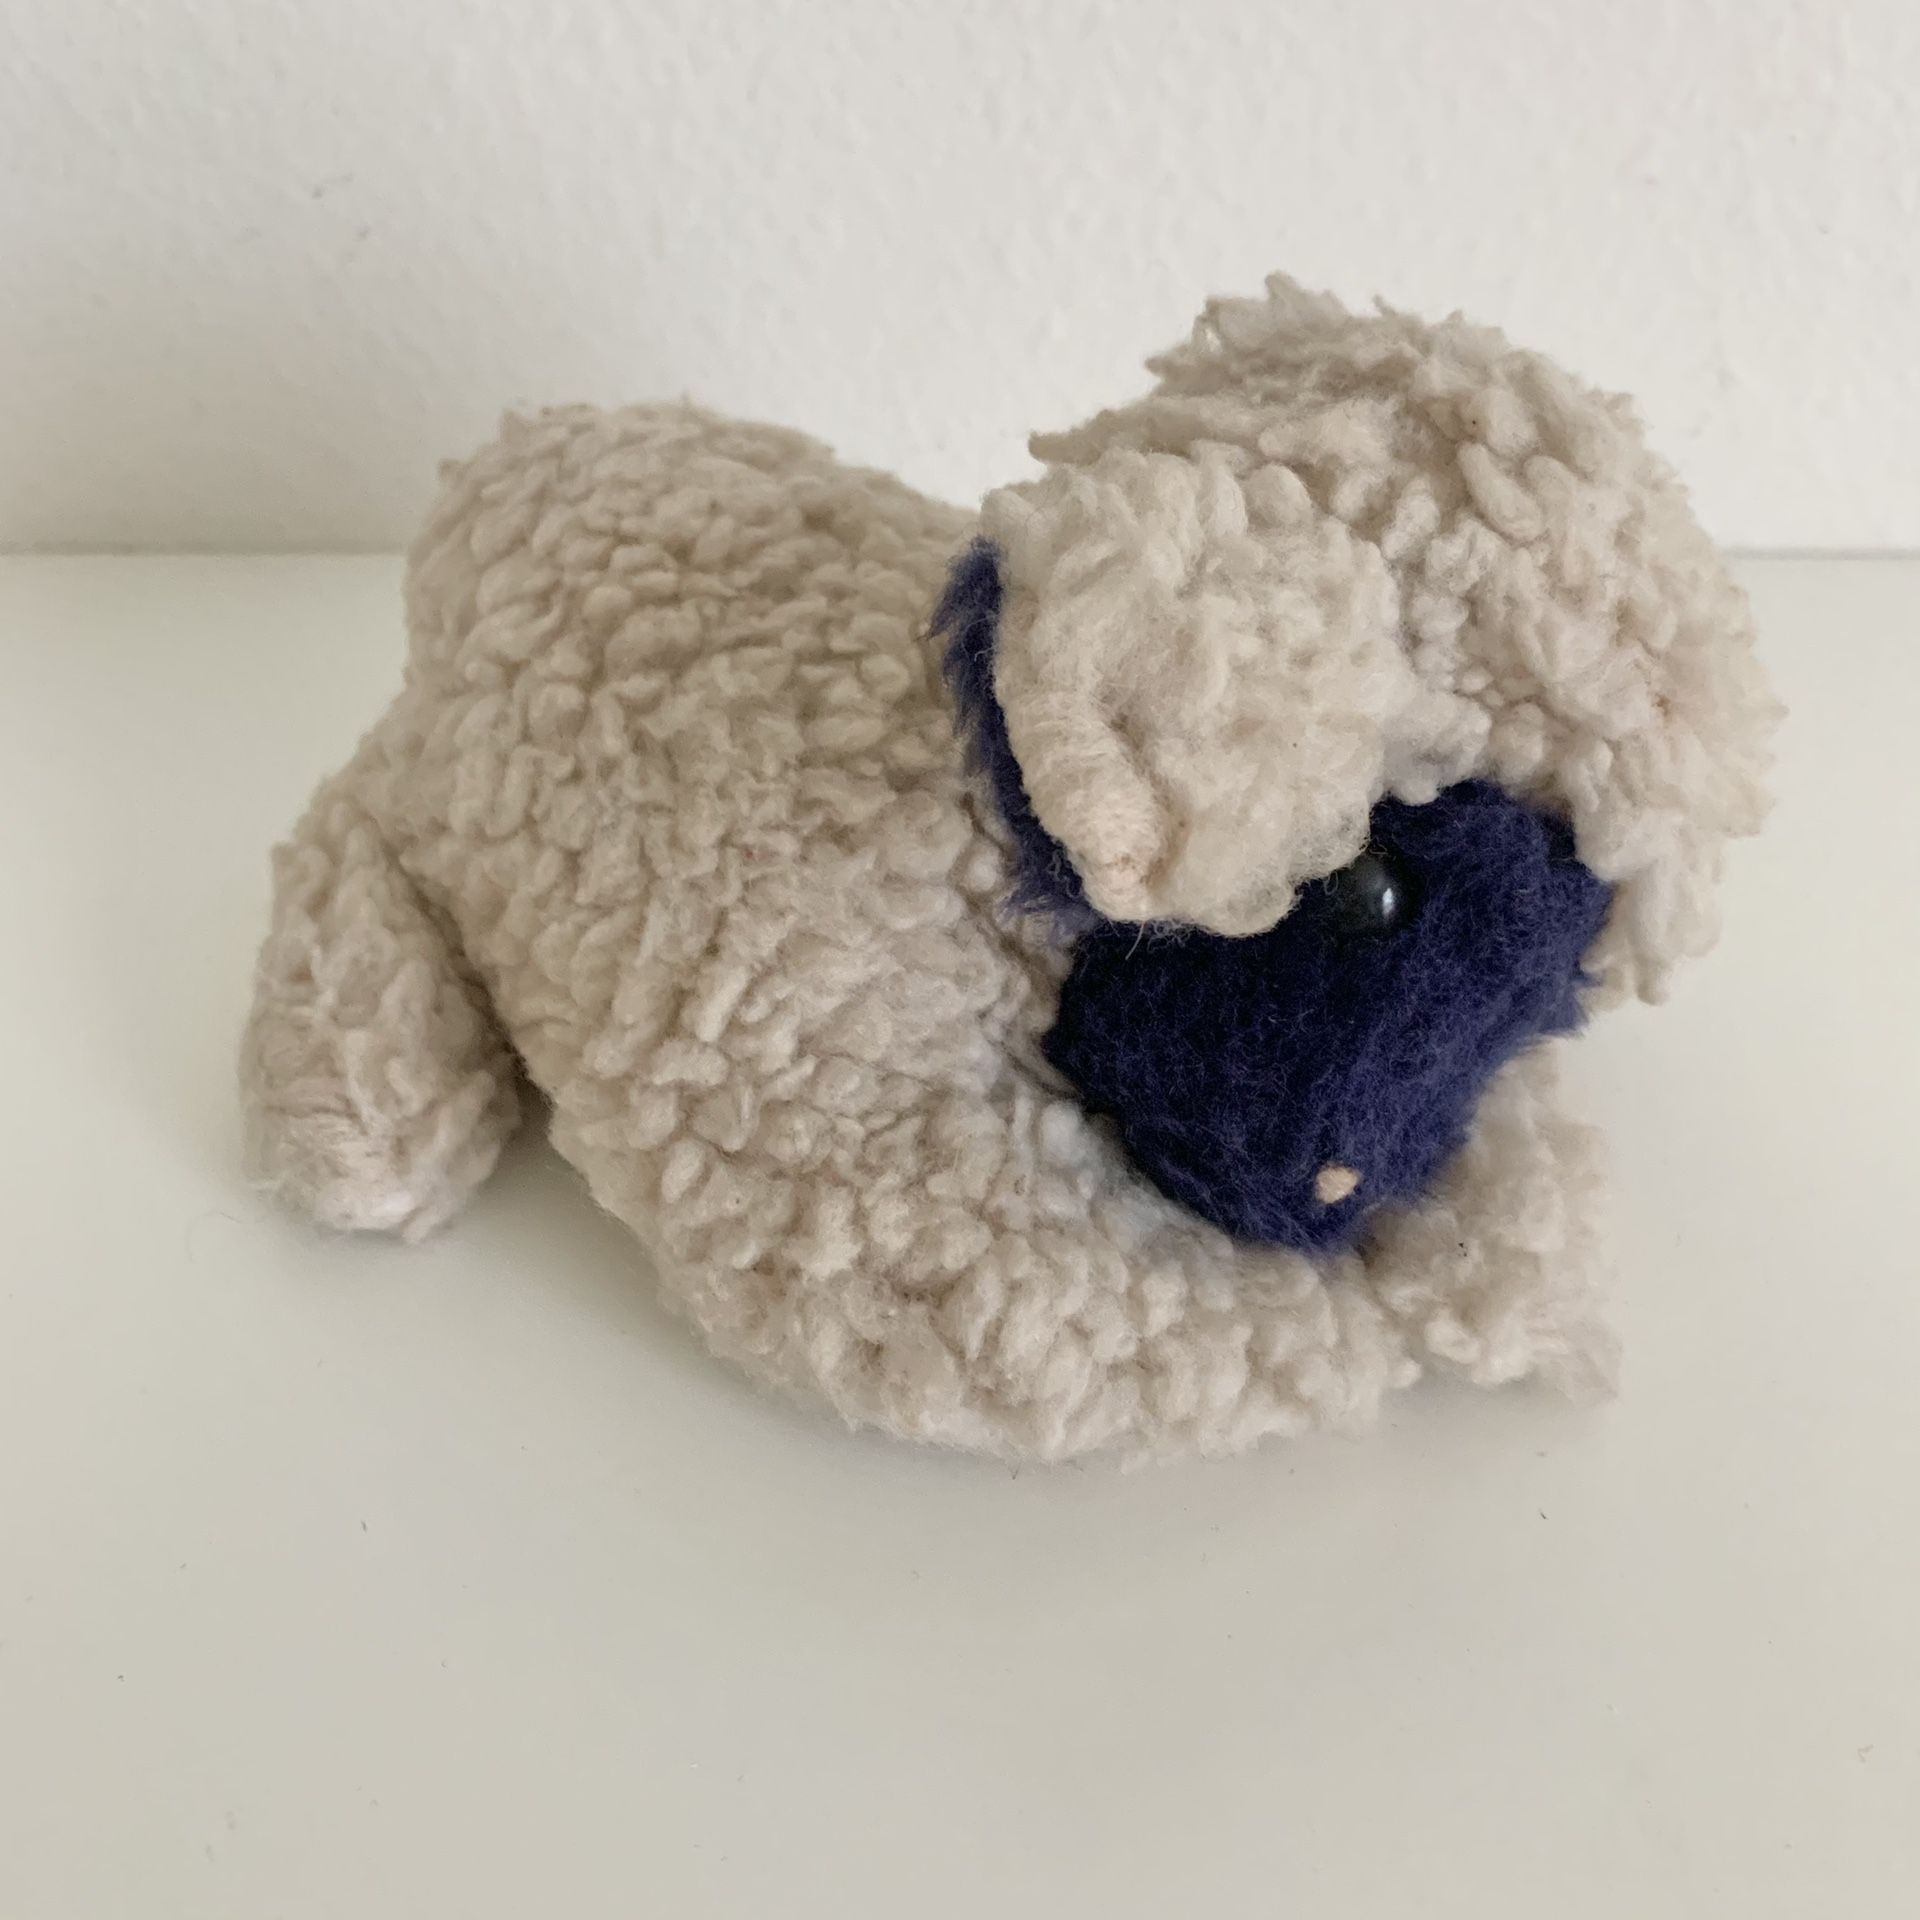 1974 Dakin Pillow Pets Oatmeal Sheep Stuffed Animal